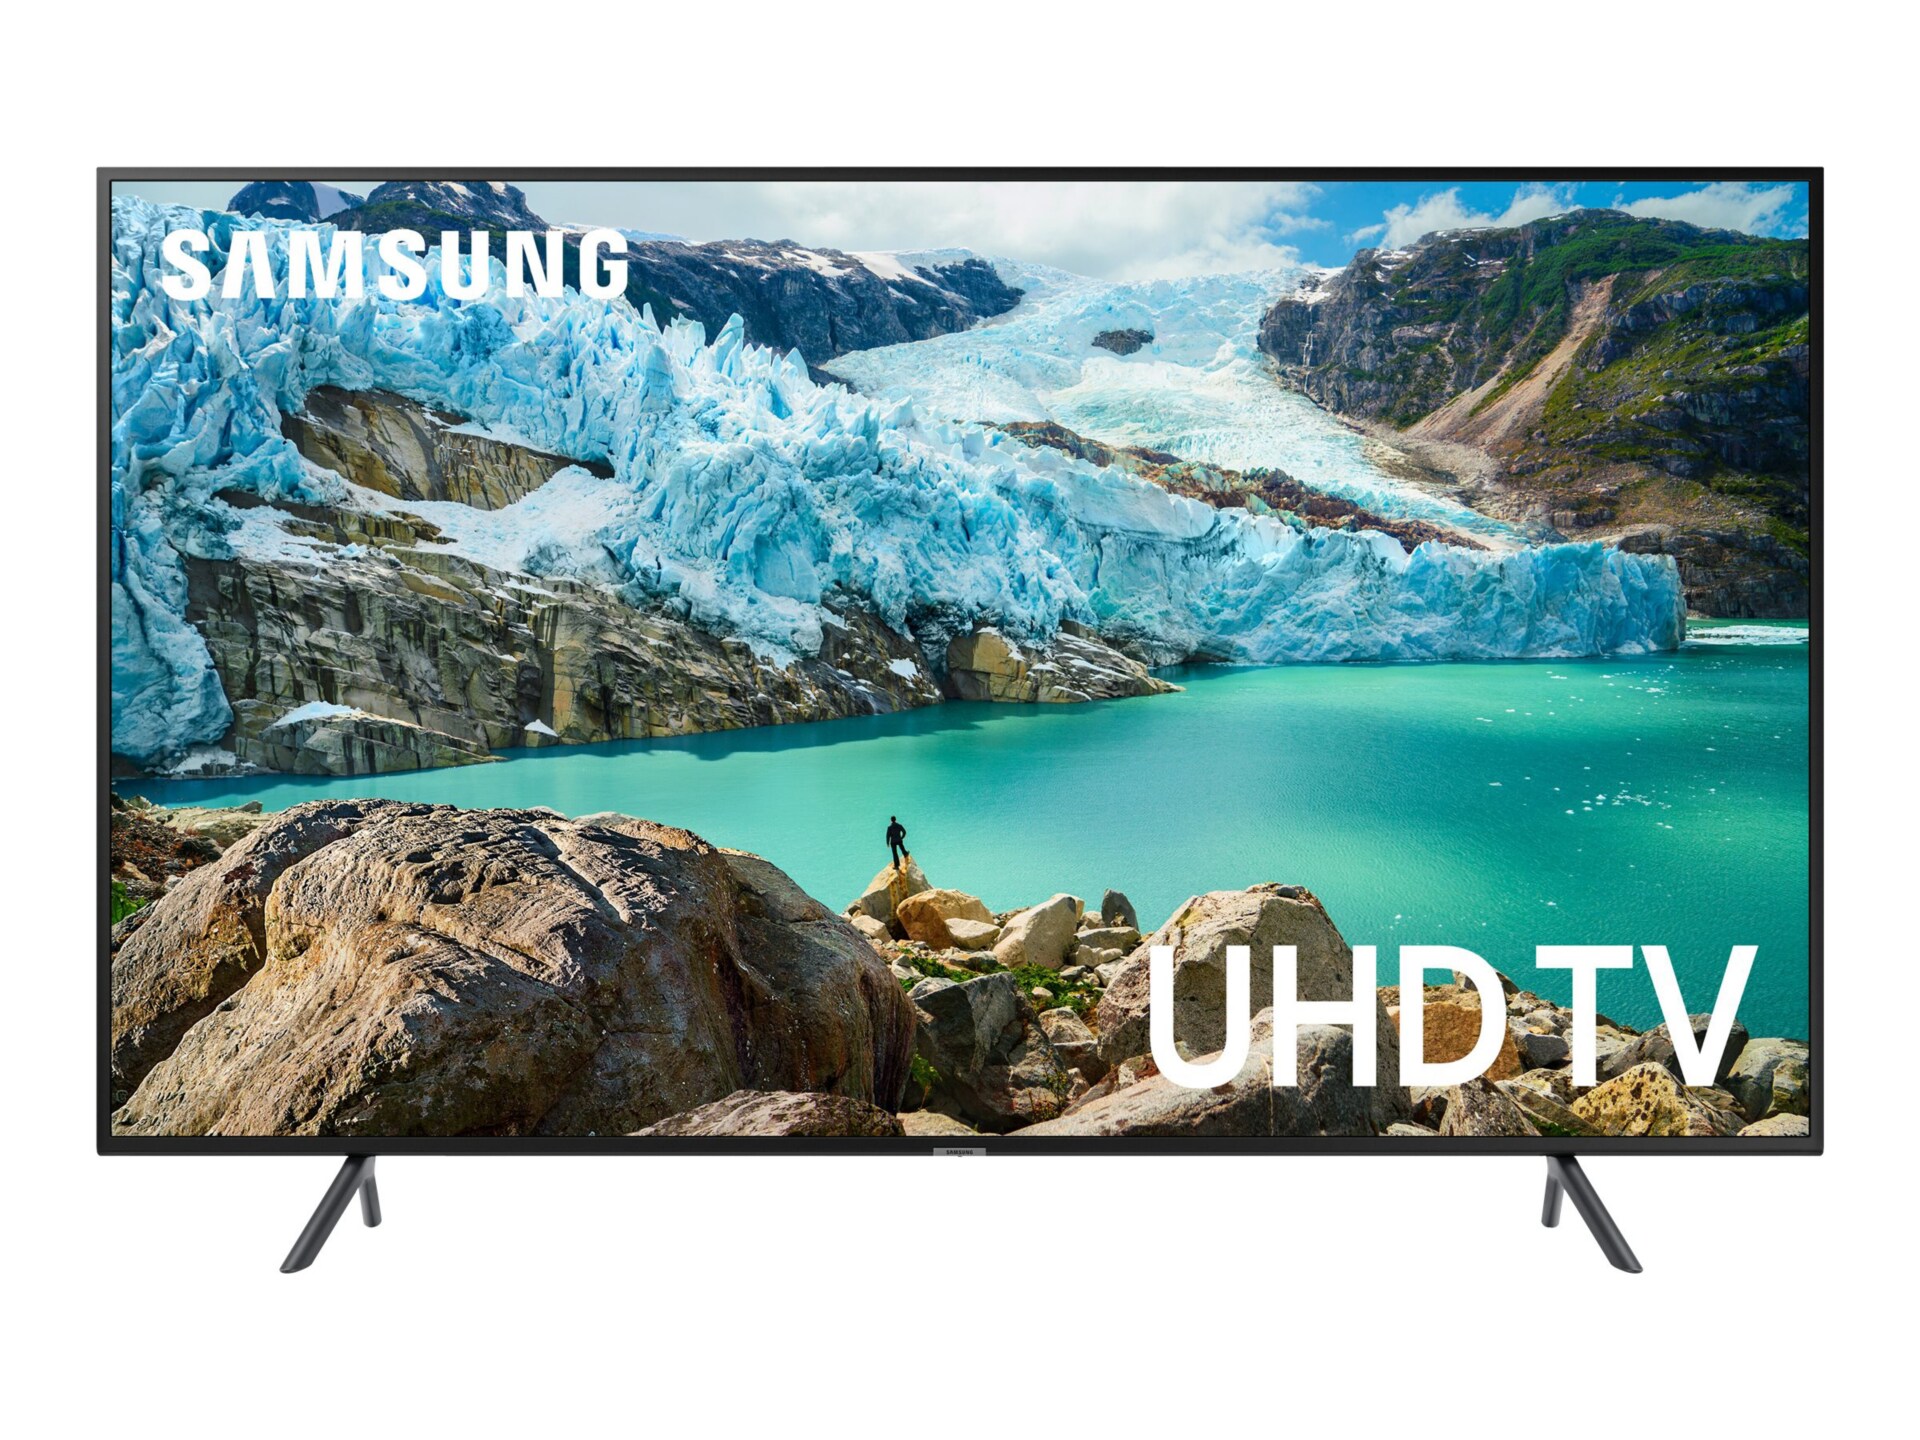 Samsung UN65RU7100F 7 Series - 65" Class (64.5" viewable) LED TV - 4K